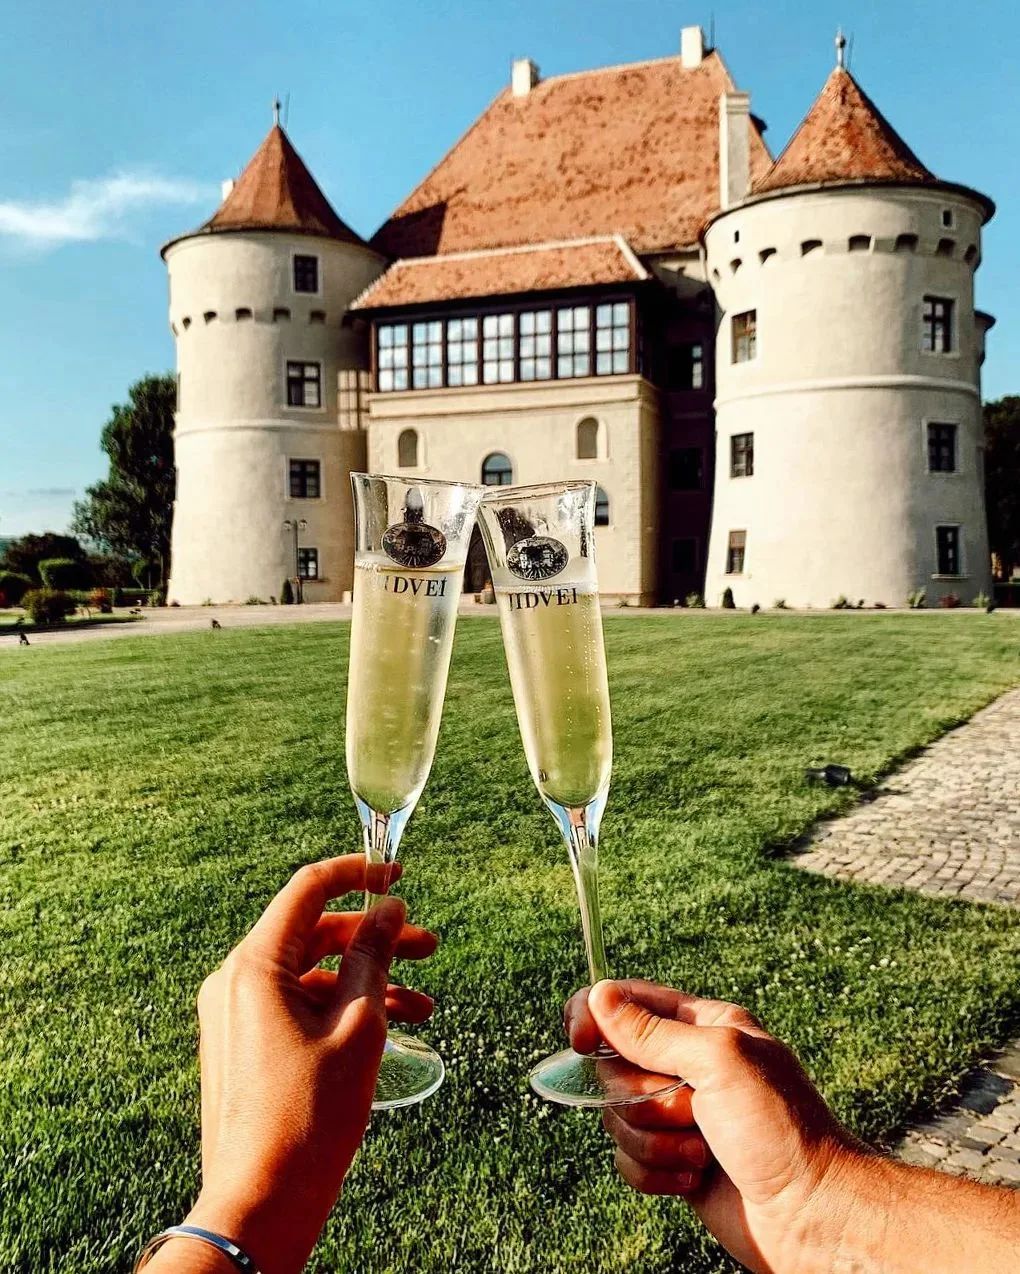 Bethlen-Haller Castle (Jidvei) - Romanian castles that every tourist must visit